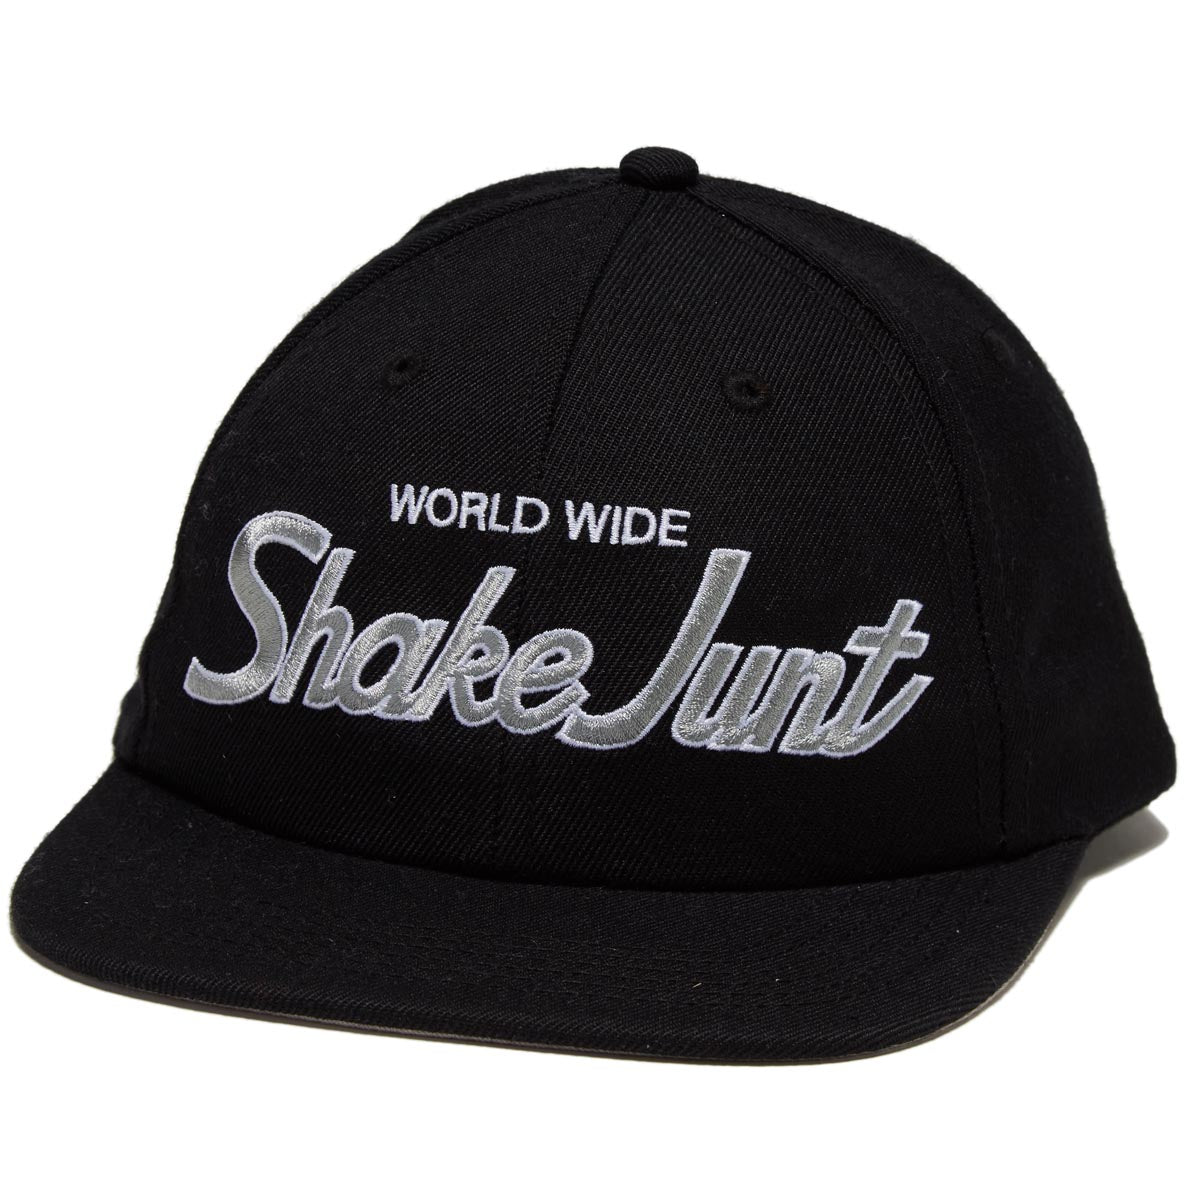 Shake Junt Worldwide Hat - Black image 1